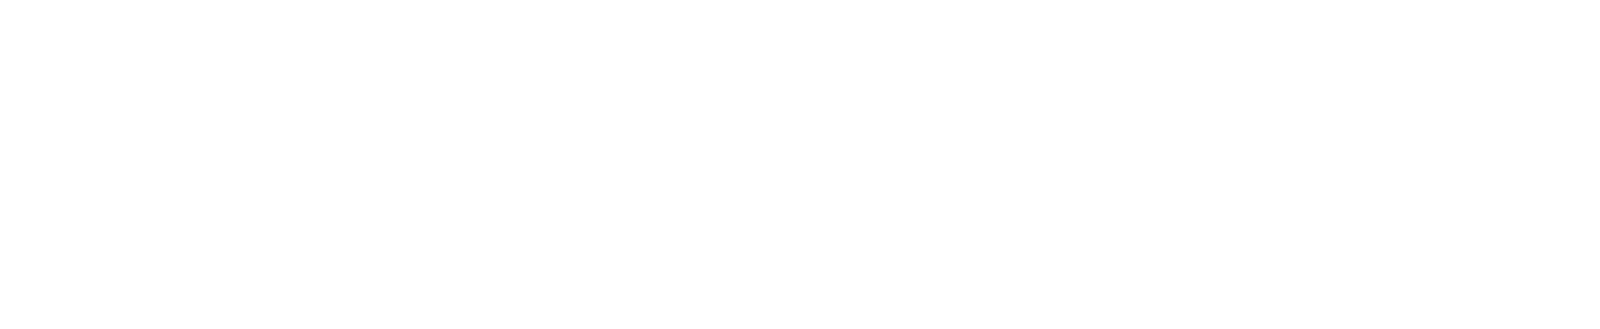 upf logo white